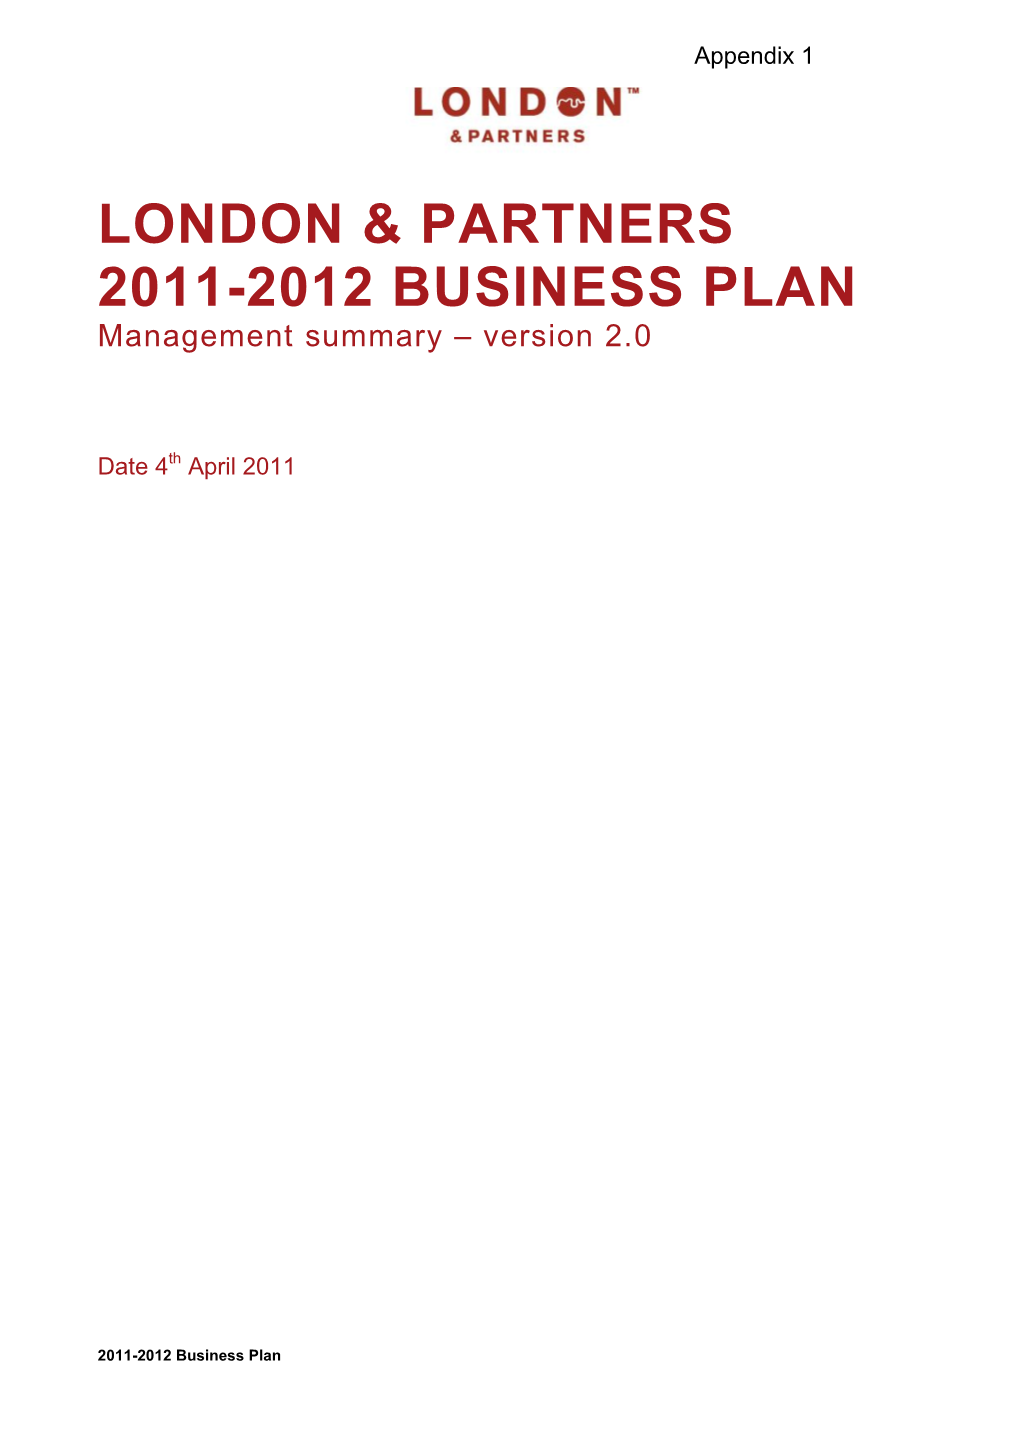 London & Partners 2011-2012 Business Plan